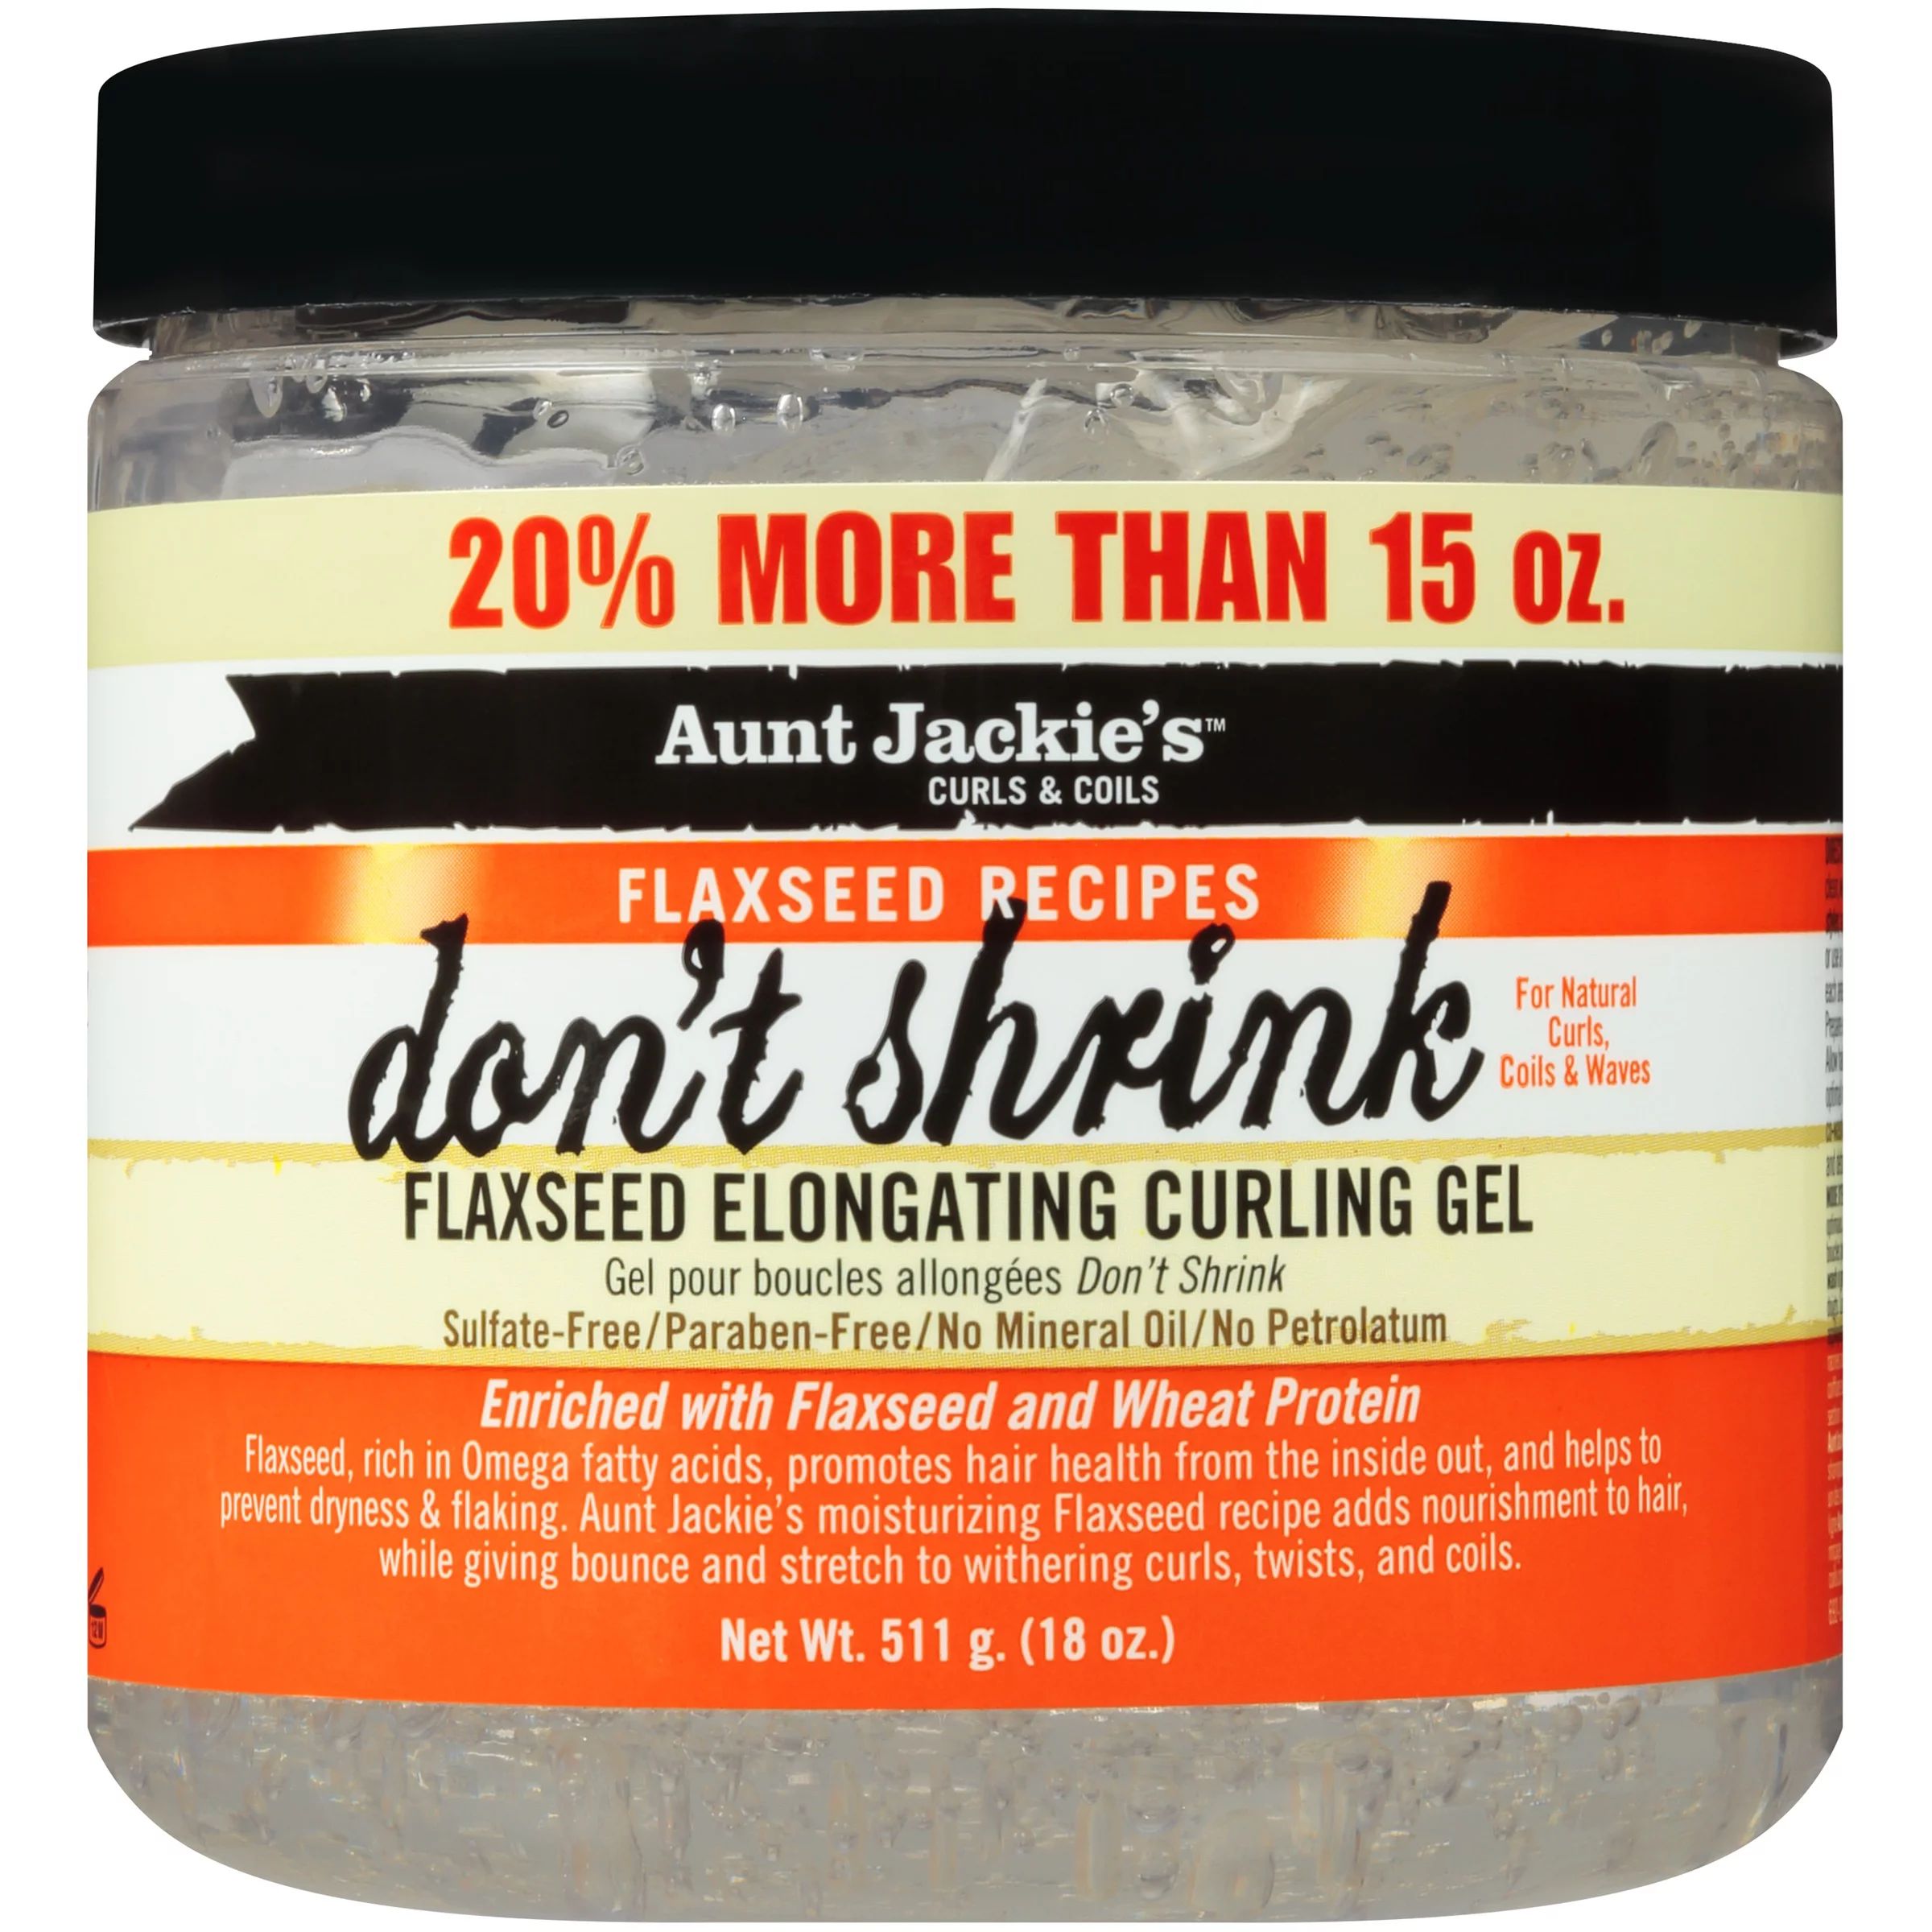 Aunt Jackie's Curls & Coils Flaxseed Recipes Don't Shrink Flaxseed Elongating Curling Gel 18 oz. ... | Walmart (US)